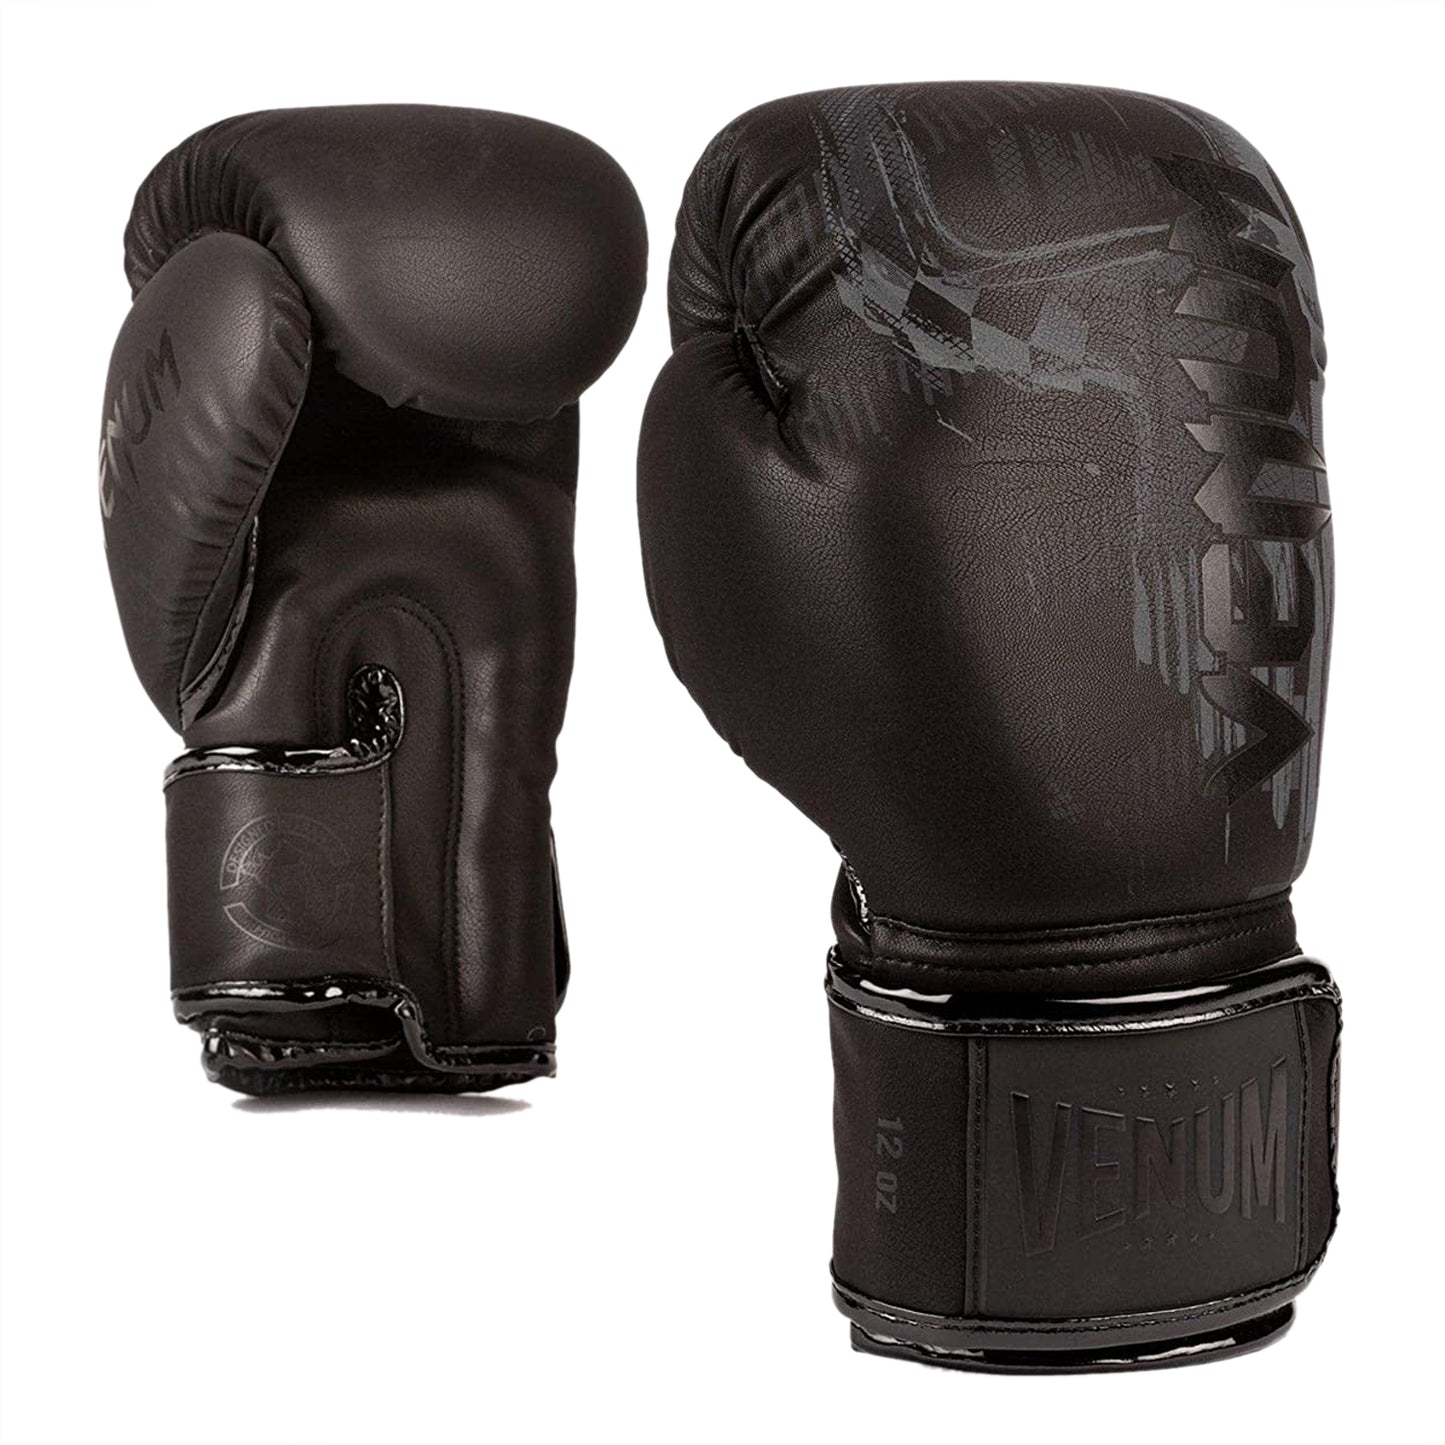 Venum Skull Boxing Gloves - Best Price online Prokicksports.com